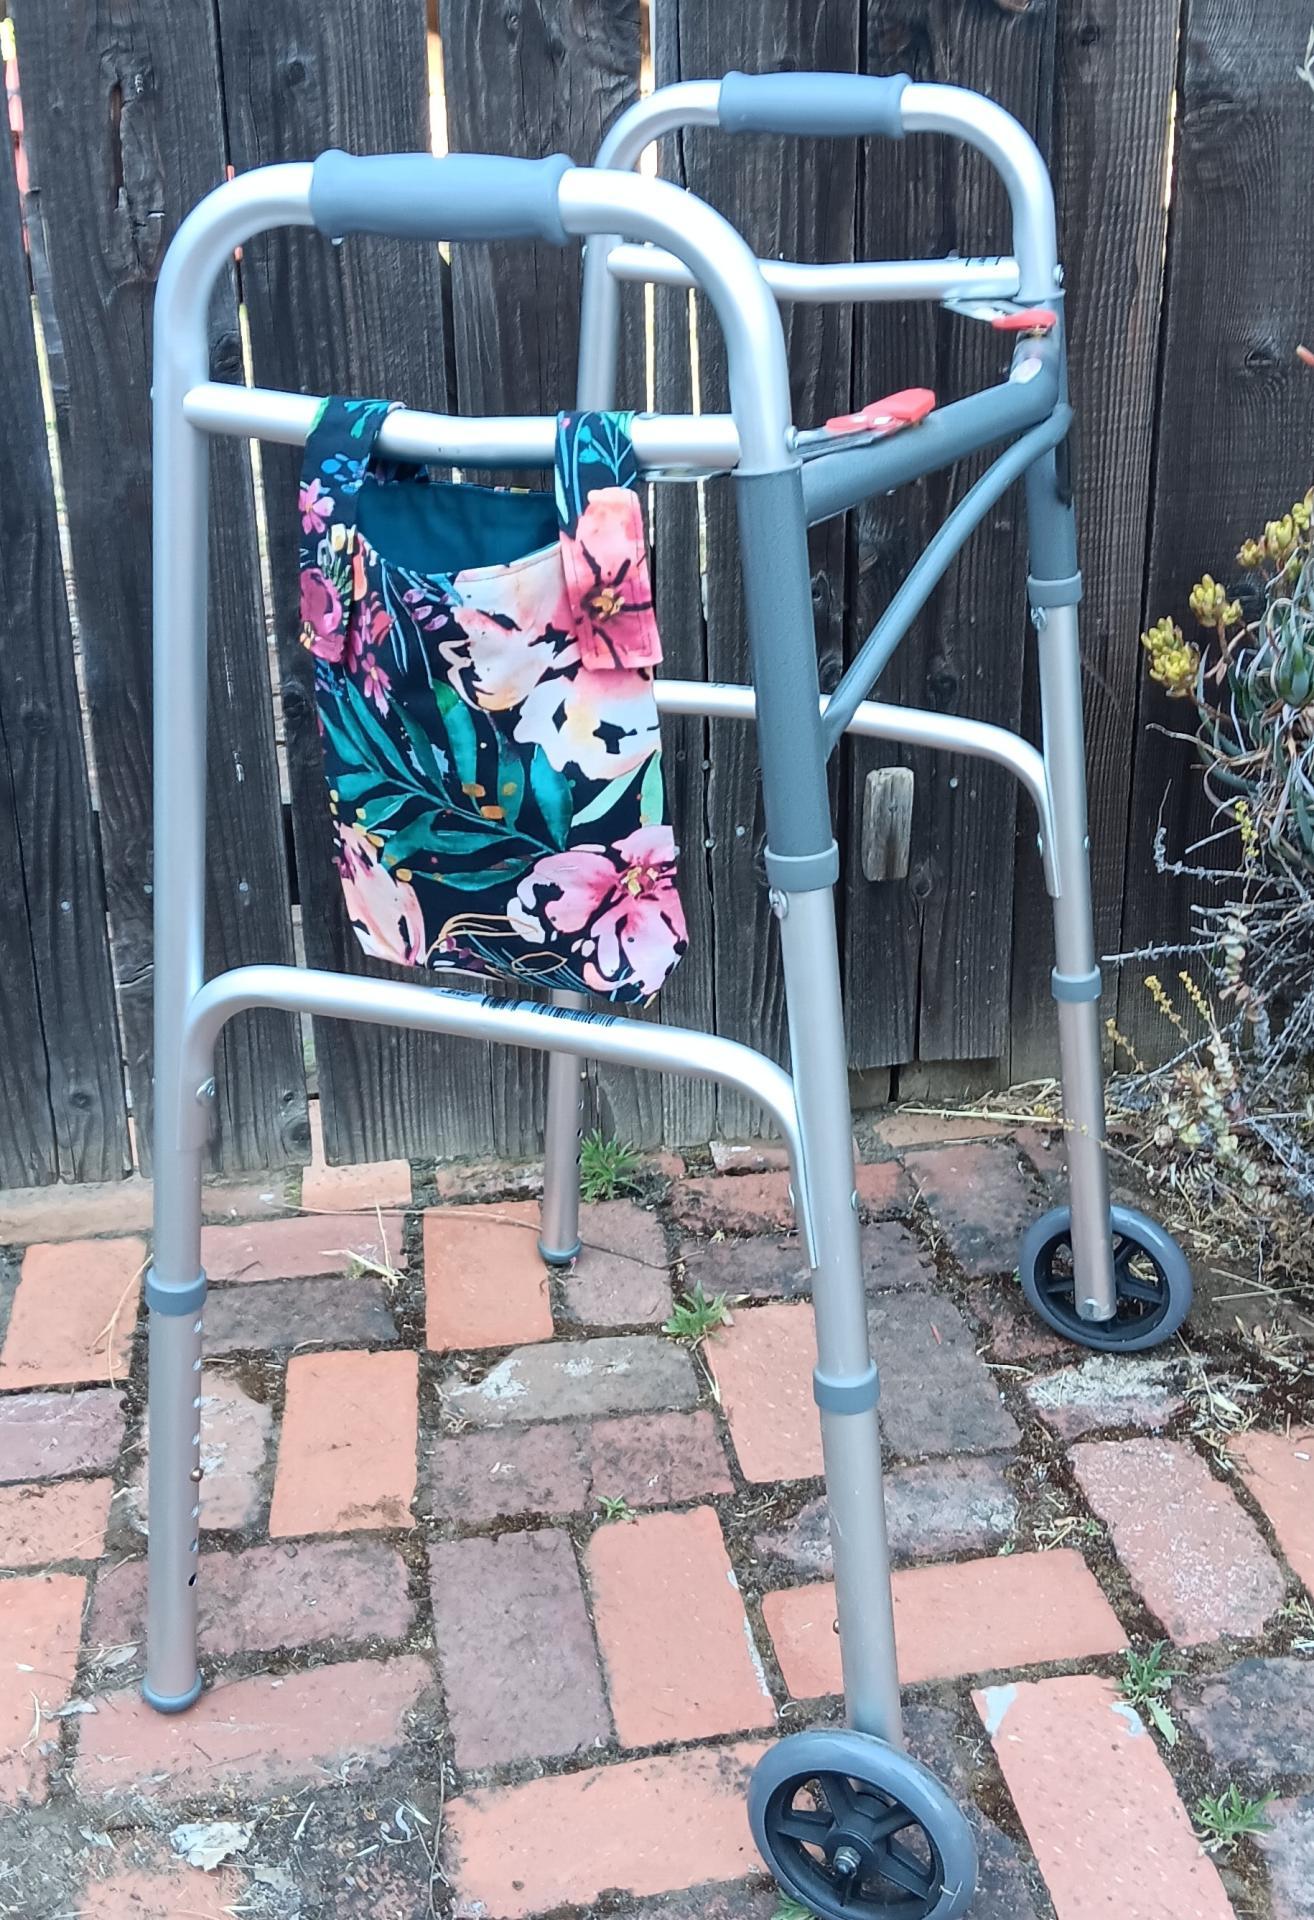 Simple basic small bag for crutch, walker, stroller, scooter handlebars, bed rail, caddy, whimsical zebras horses, animal theme, green